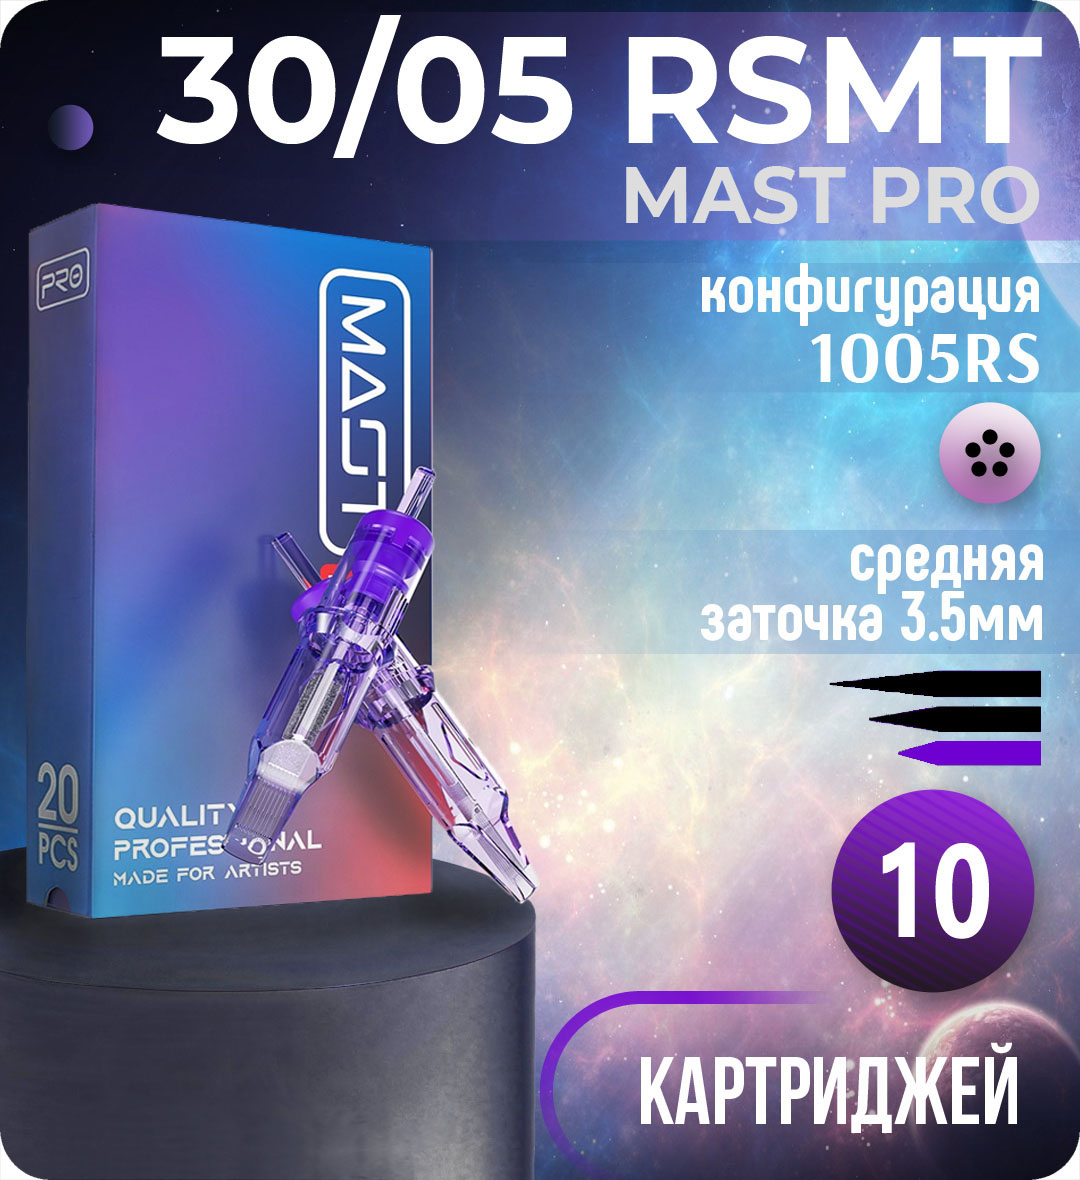 Картриджи Mast Pro 30/05 RSMT (1005RS) для тату, перманентного макияжа и татуажа Dragonhawk 10шт